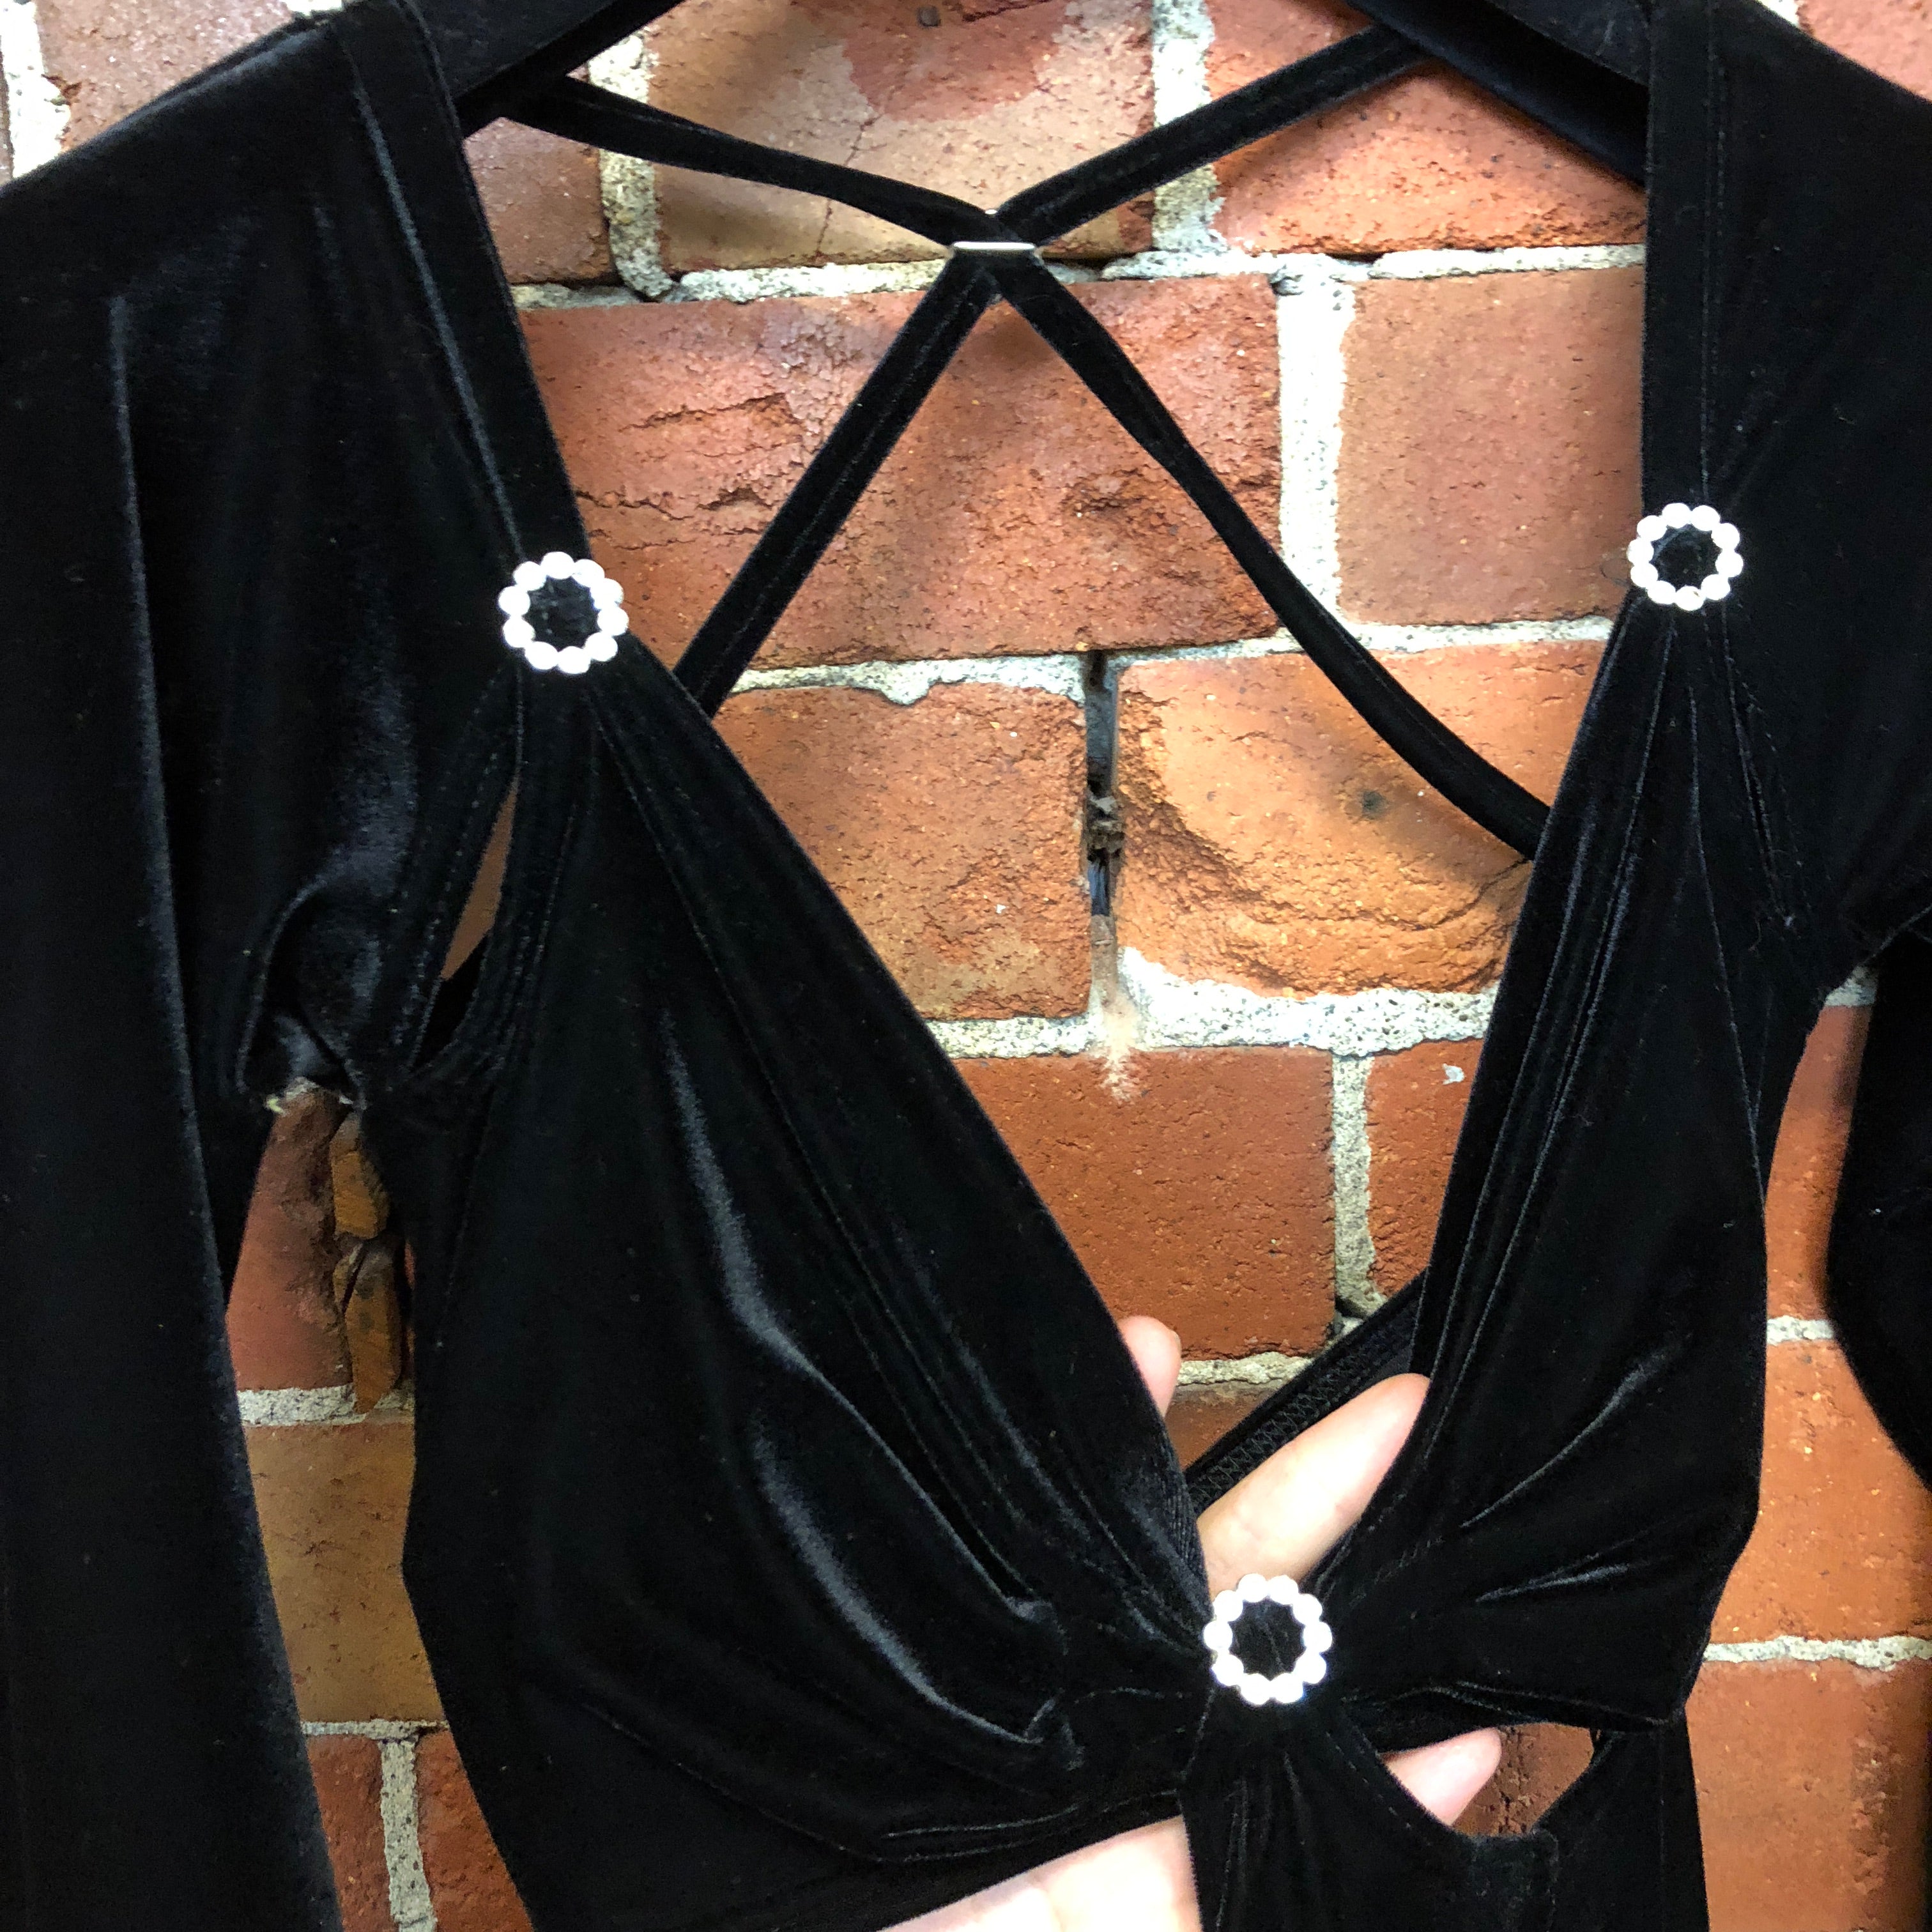 1980s Versace style velvet gown